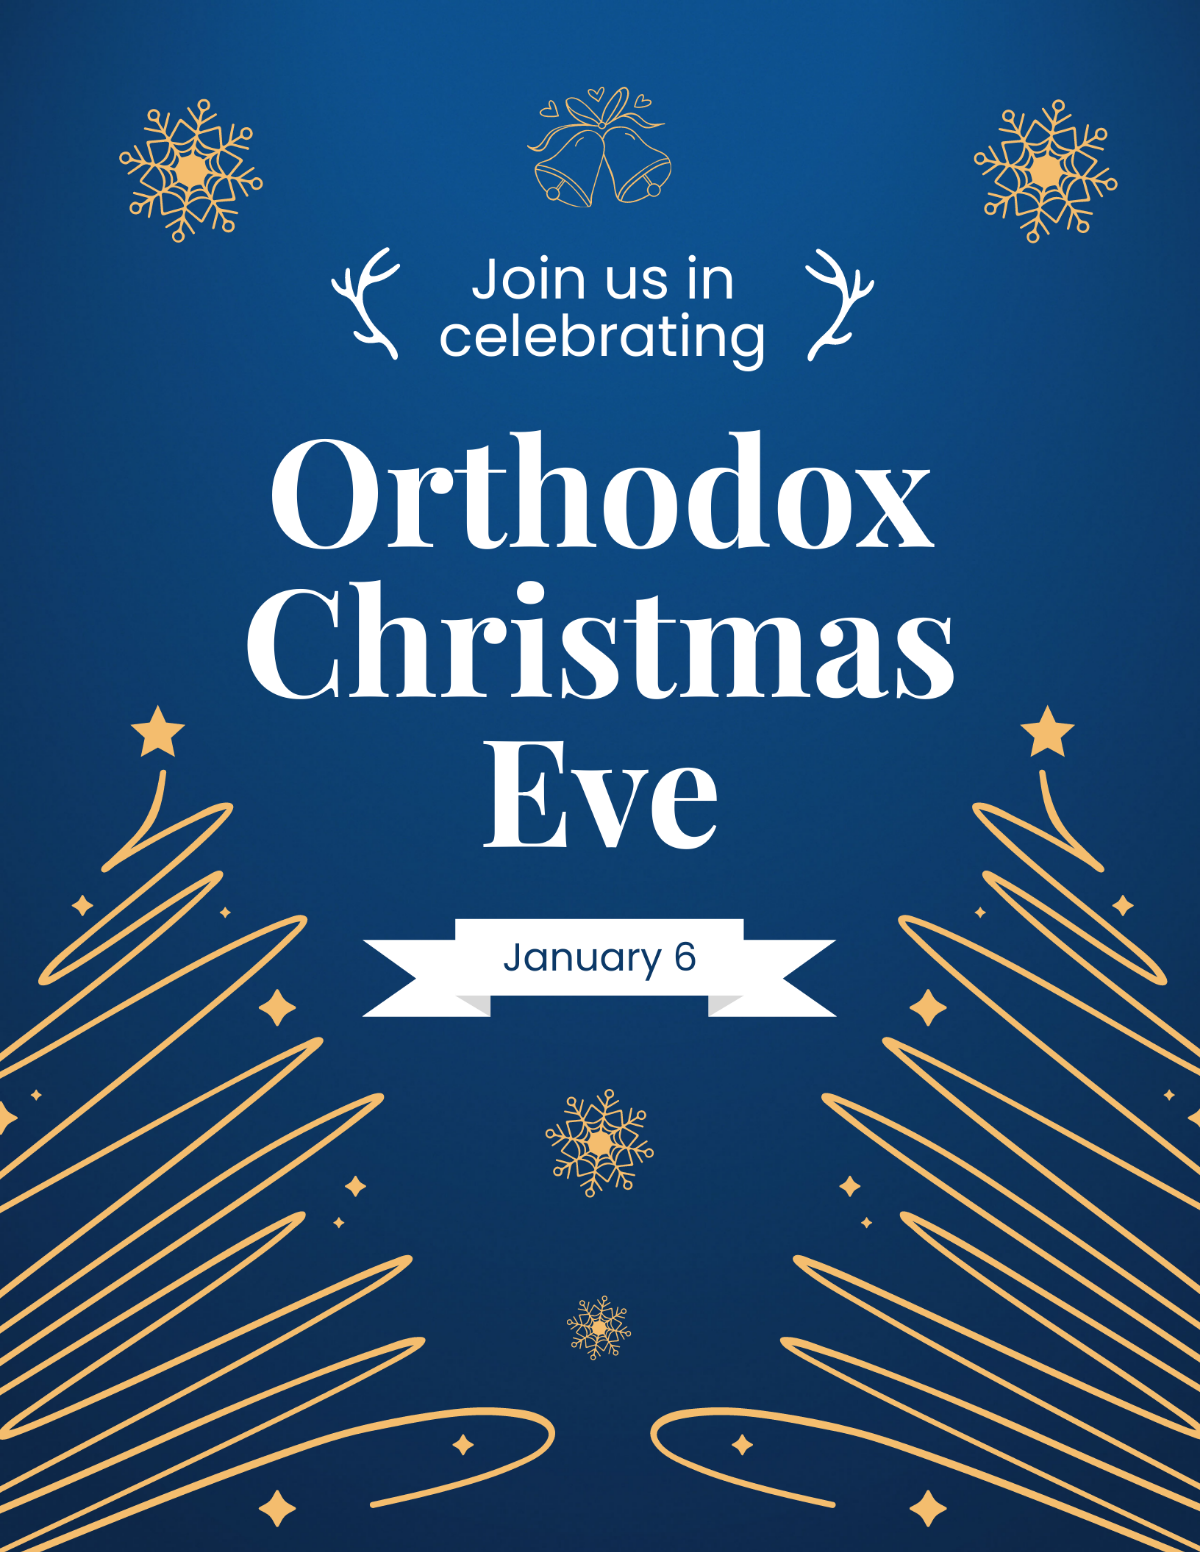 Orthodox Christmas Eve Flyer